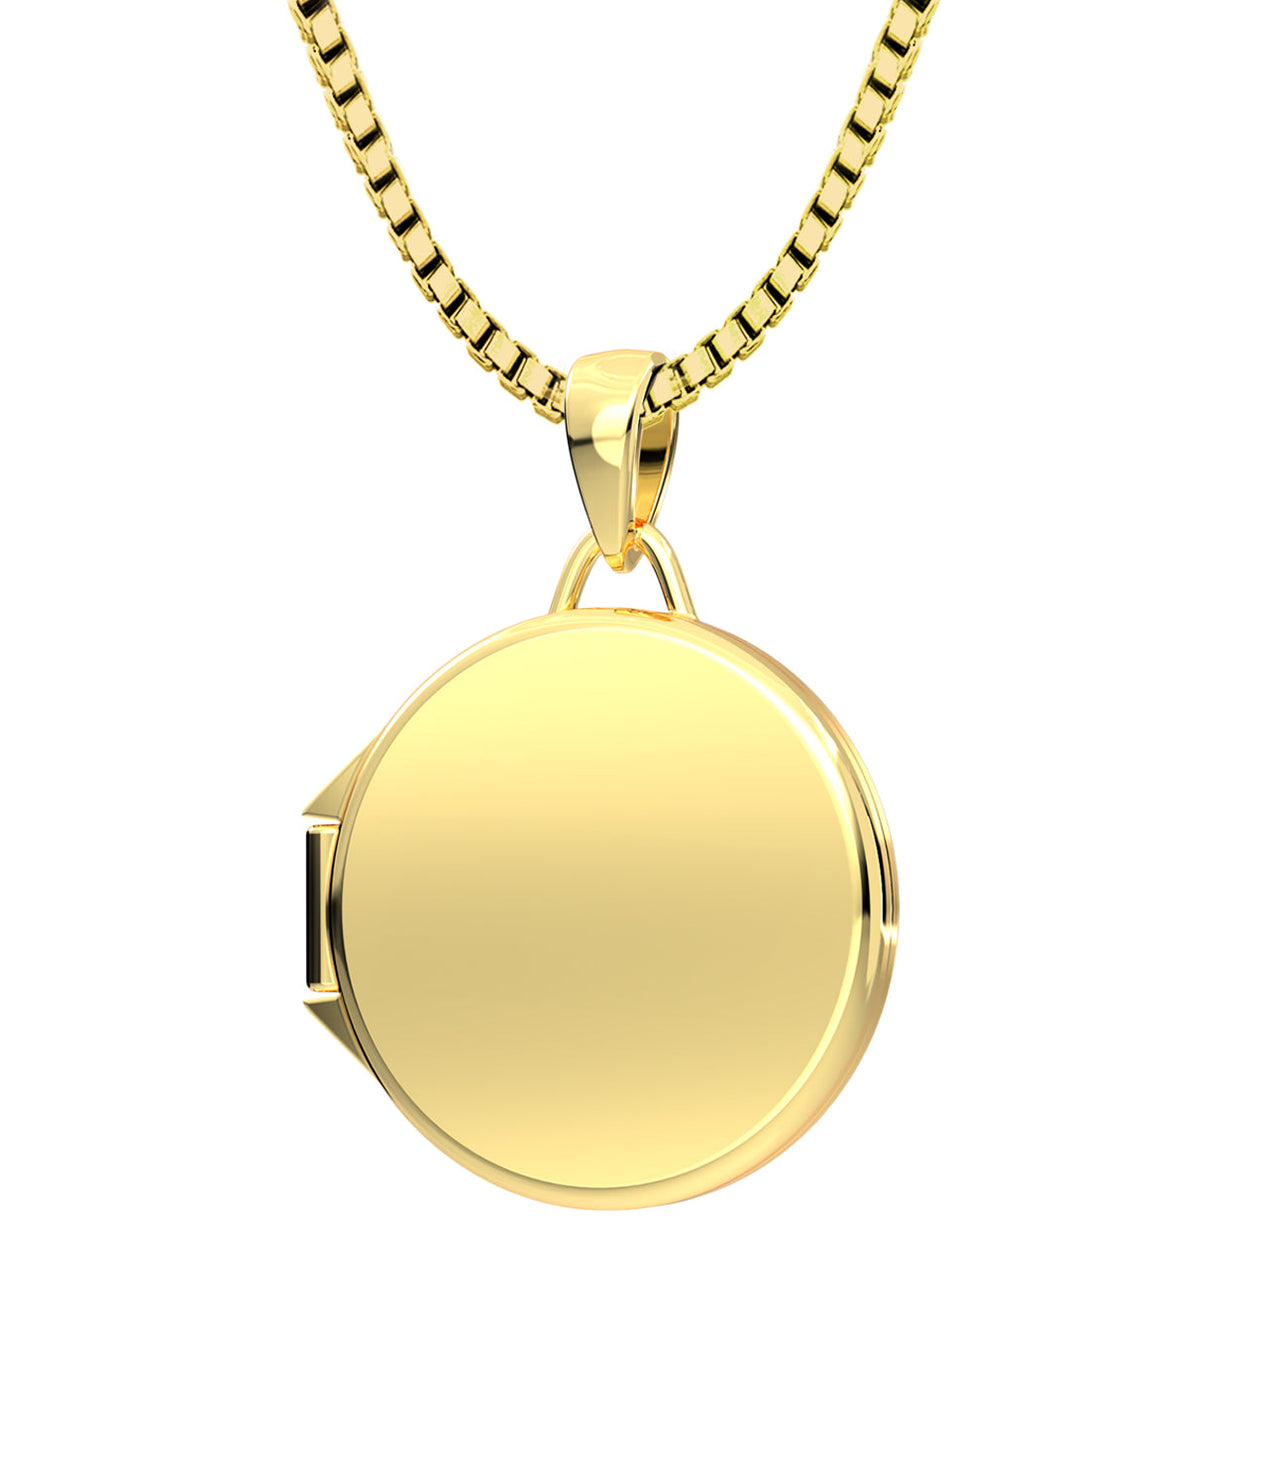 Engravable Personalized Ladies 14k Yellow Gold Polished Round 2 Photo 18mm Locket Pendant Necklace